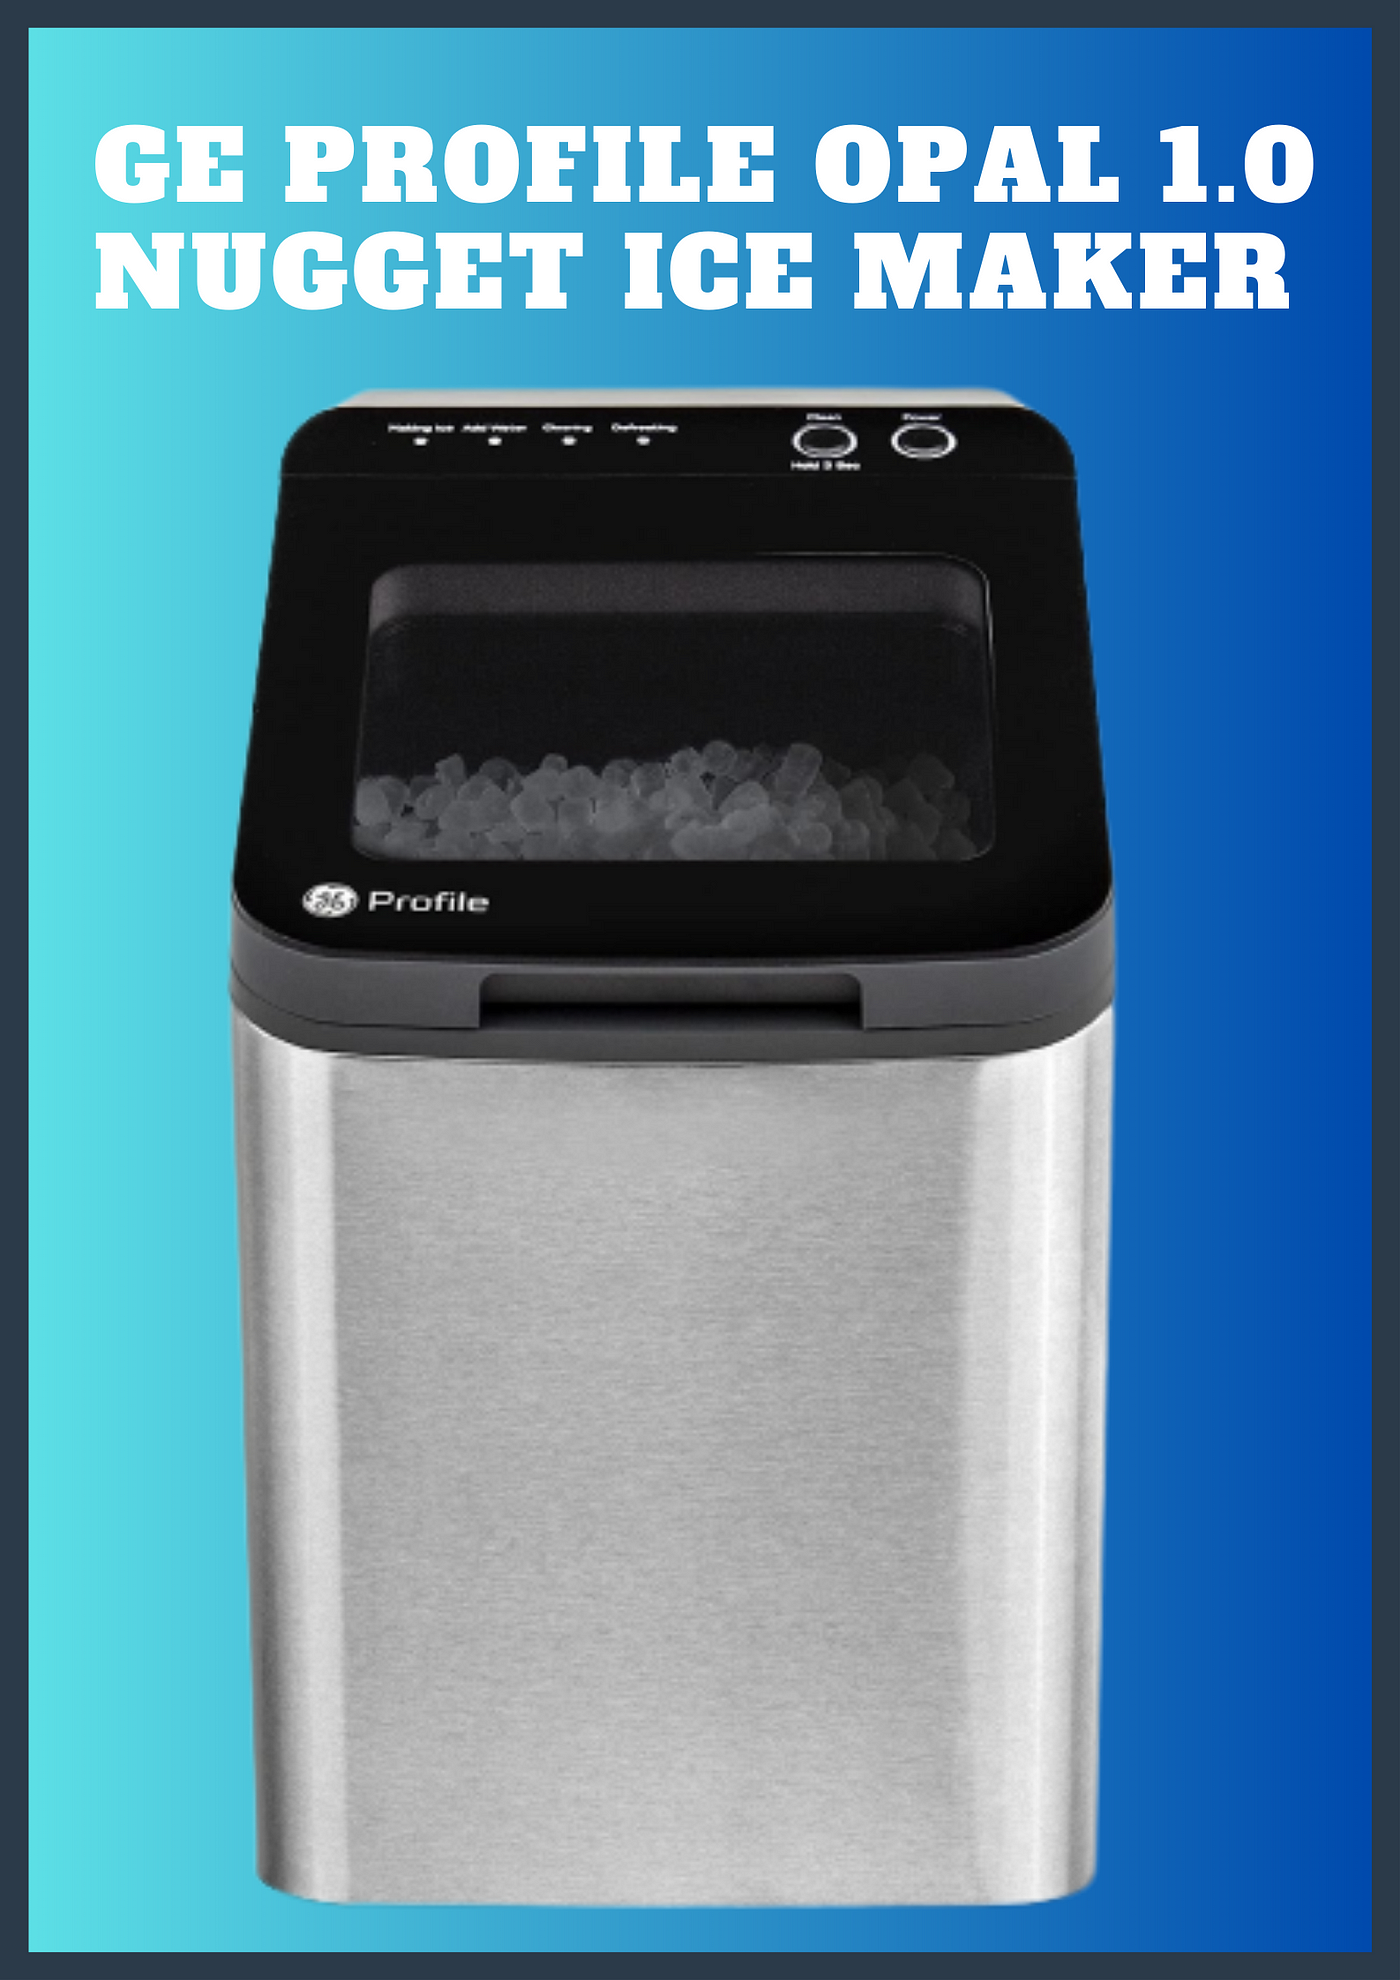 GE Profile Opal 1.0 Nugget Ice Maker, Countertop Pebble Ice Maker, Countertop Icemaker, by dotcomproductsreview